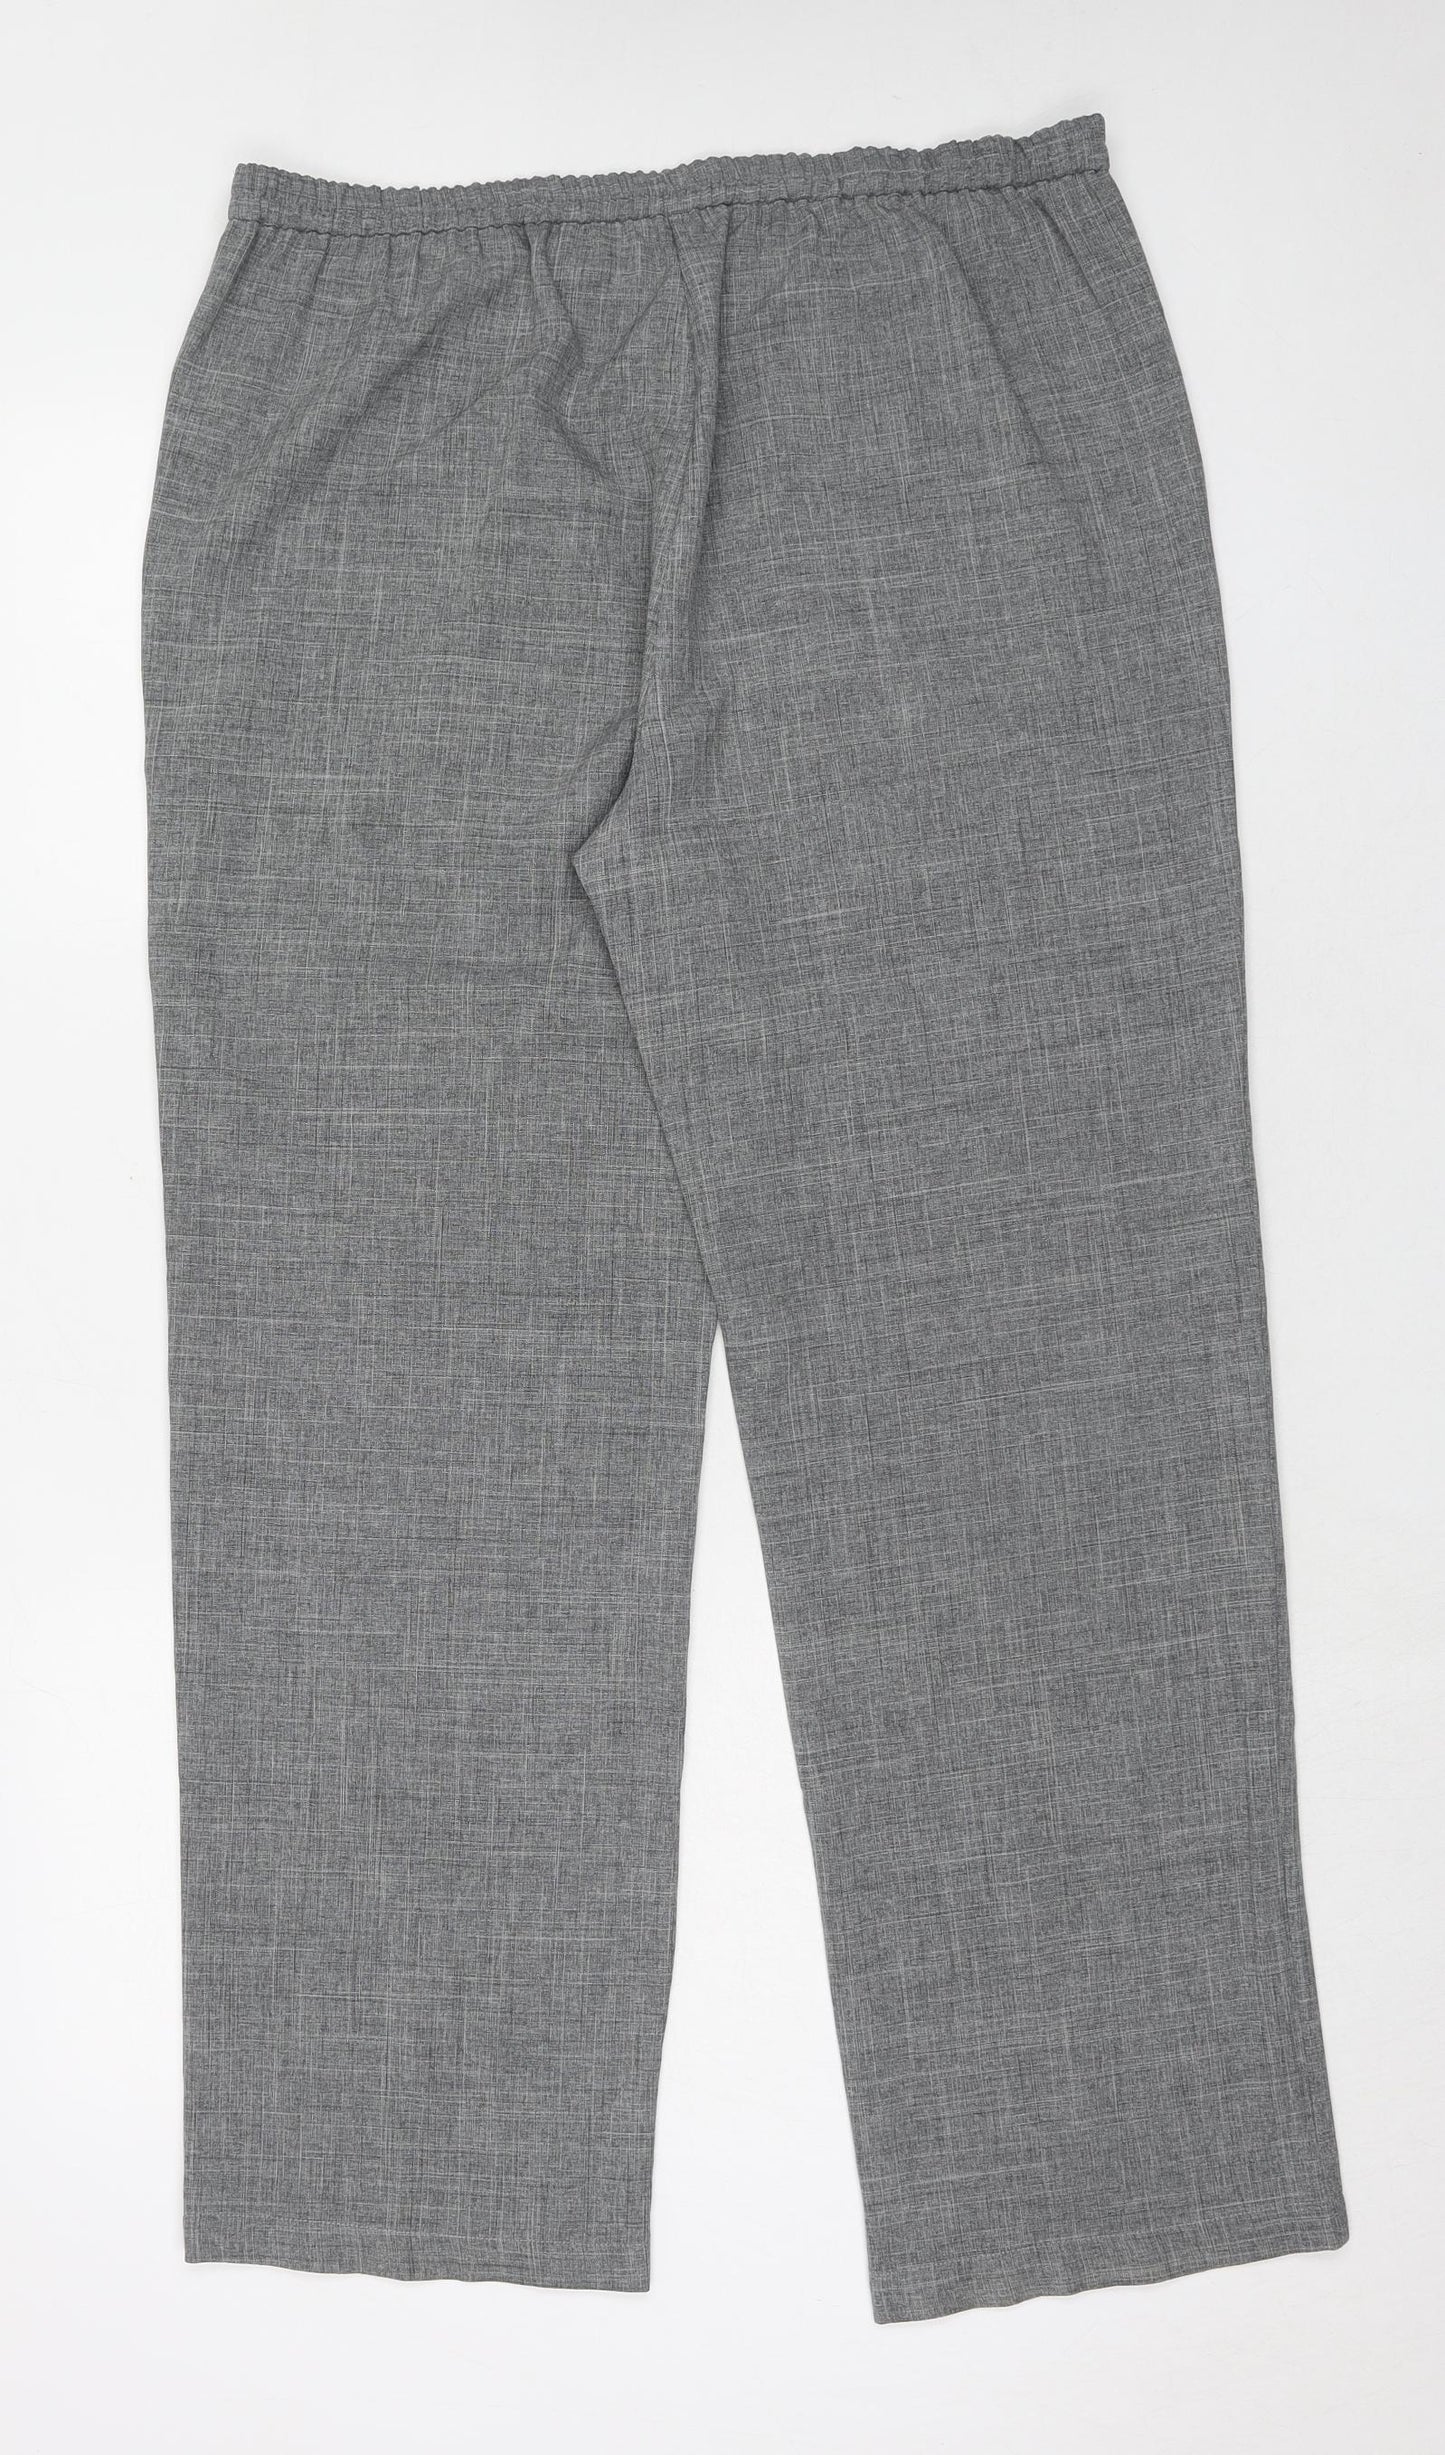 Damart Womens Grey Polyester Trousers Size 14 Regular Drawstring